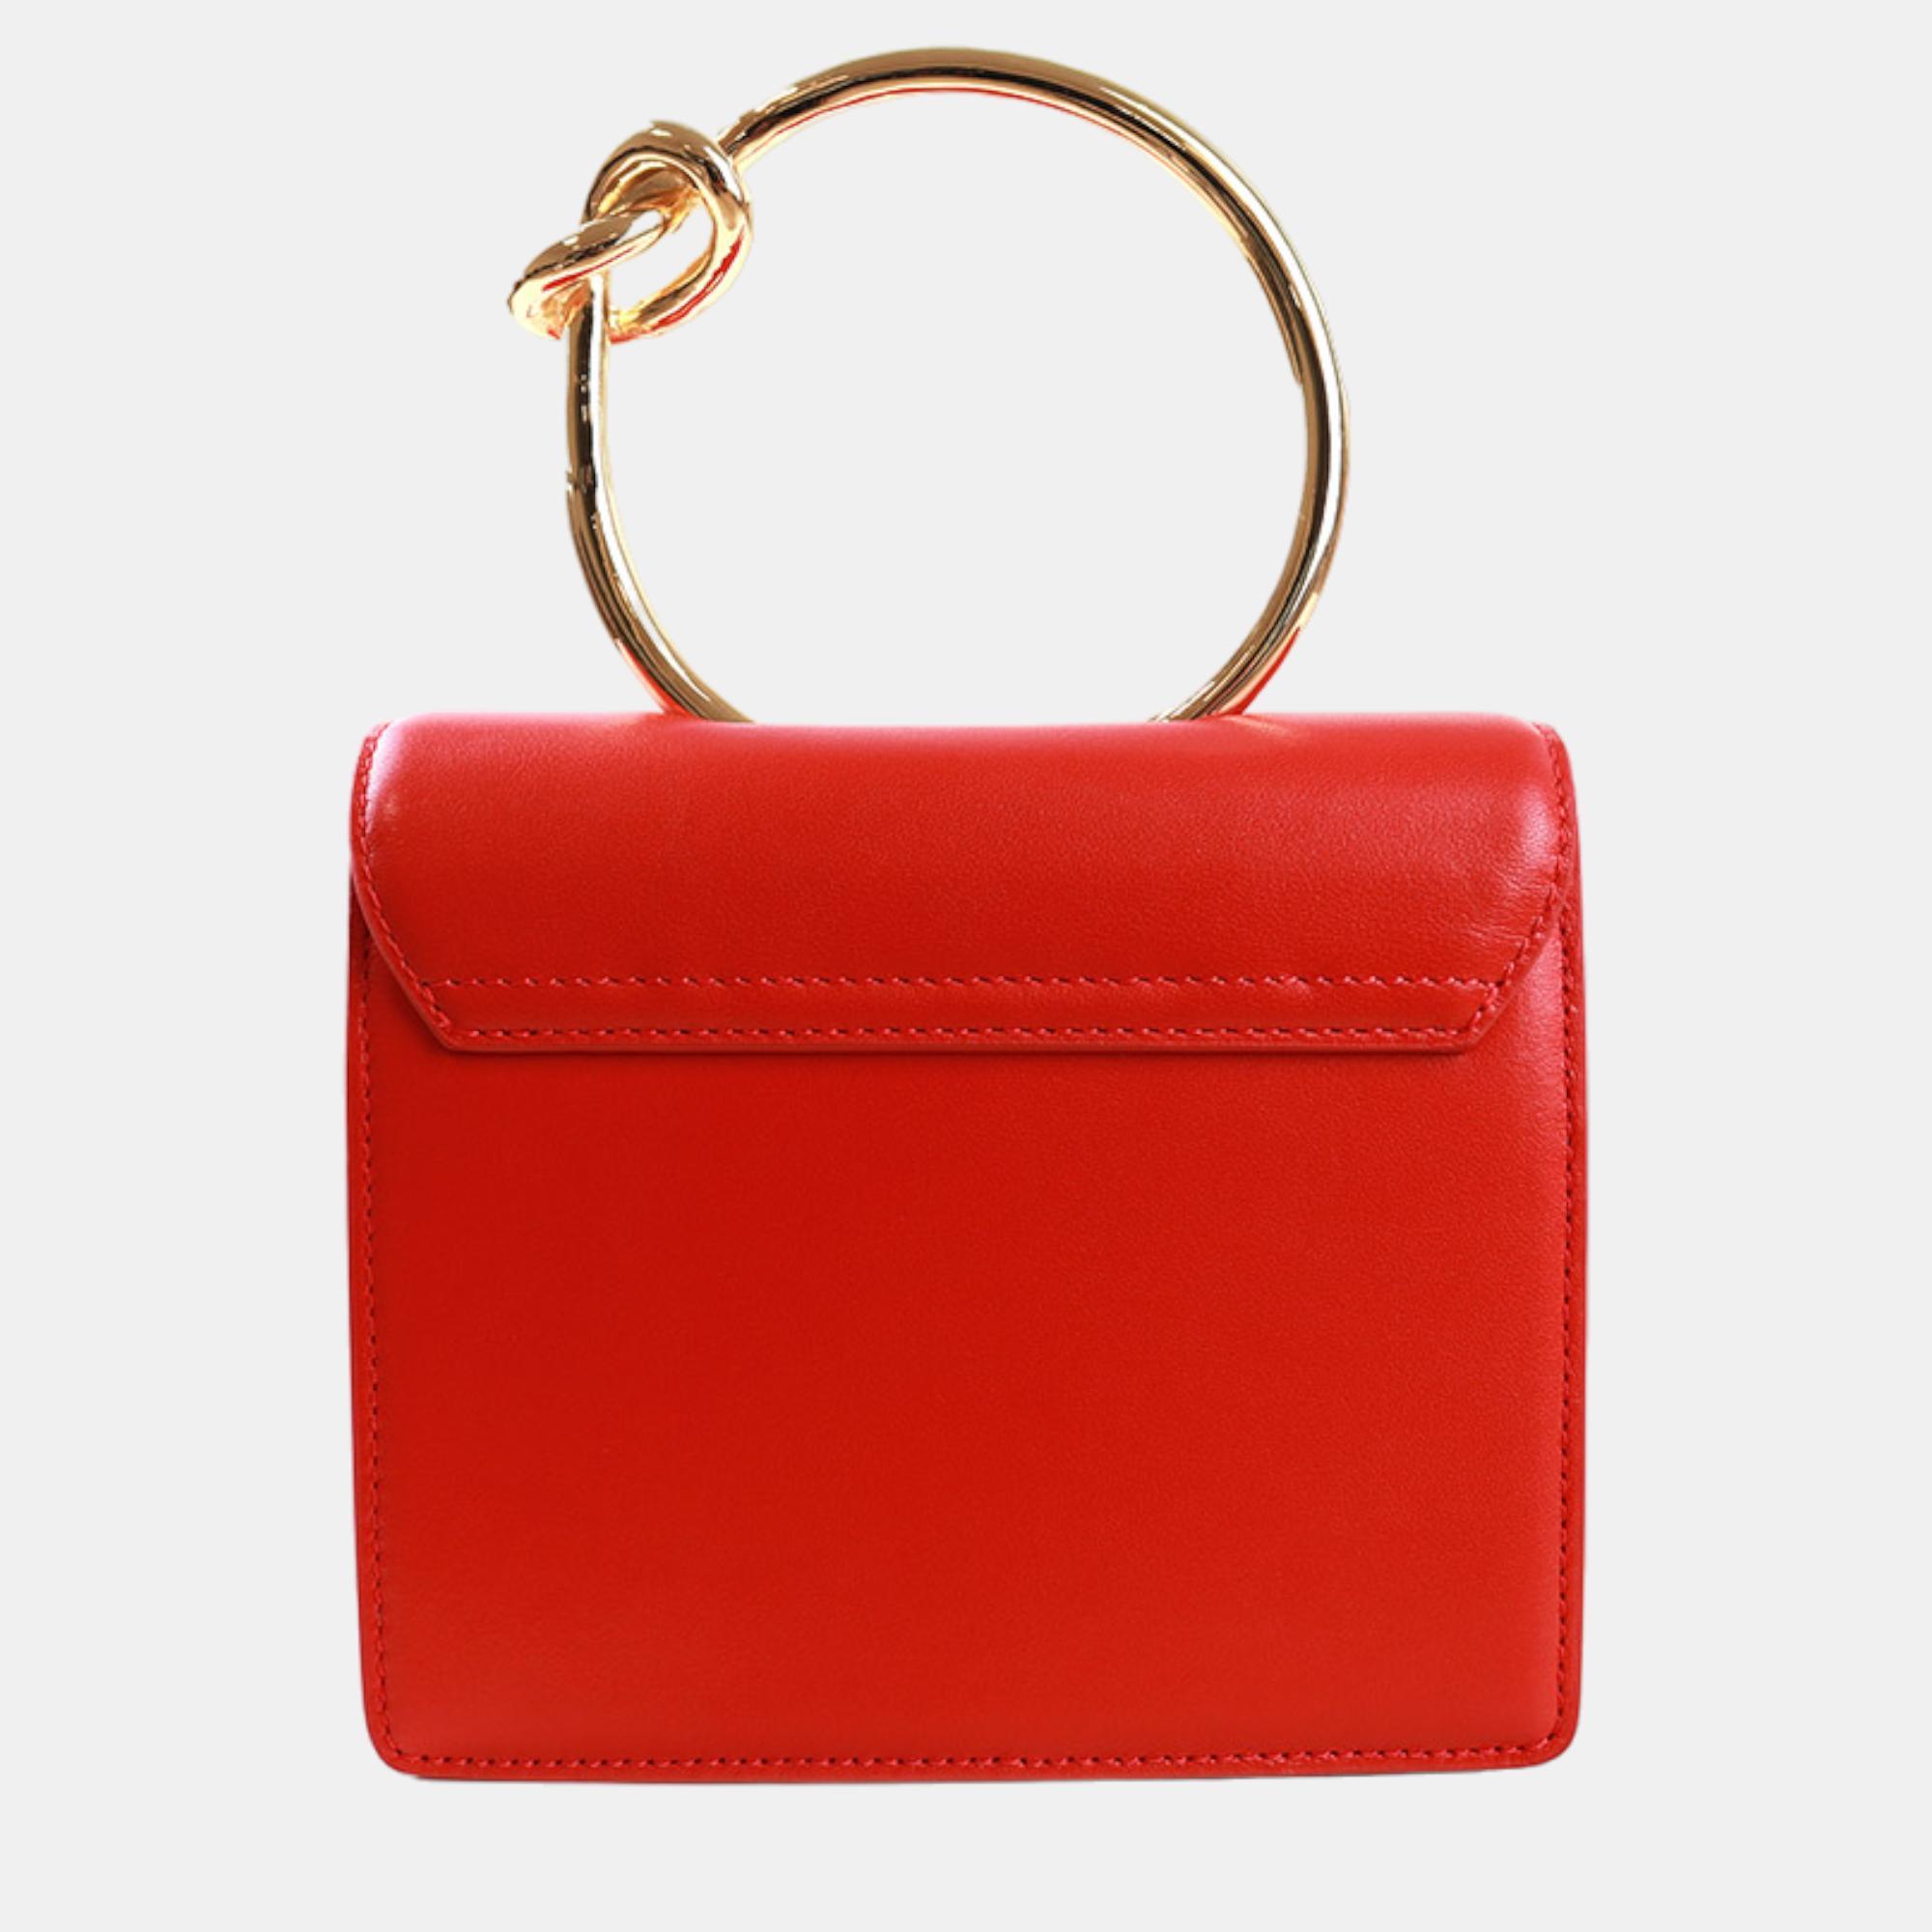 Charriol Red Leather ZENITUDE Handbag